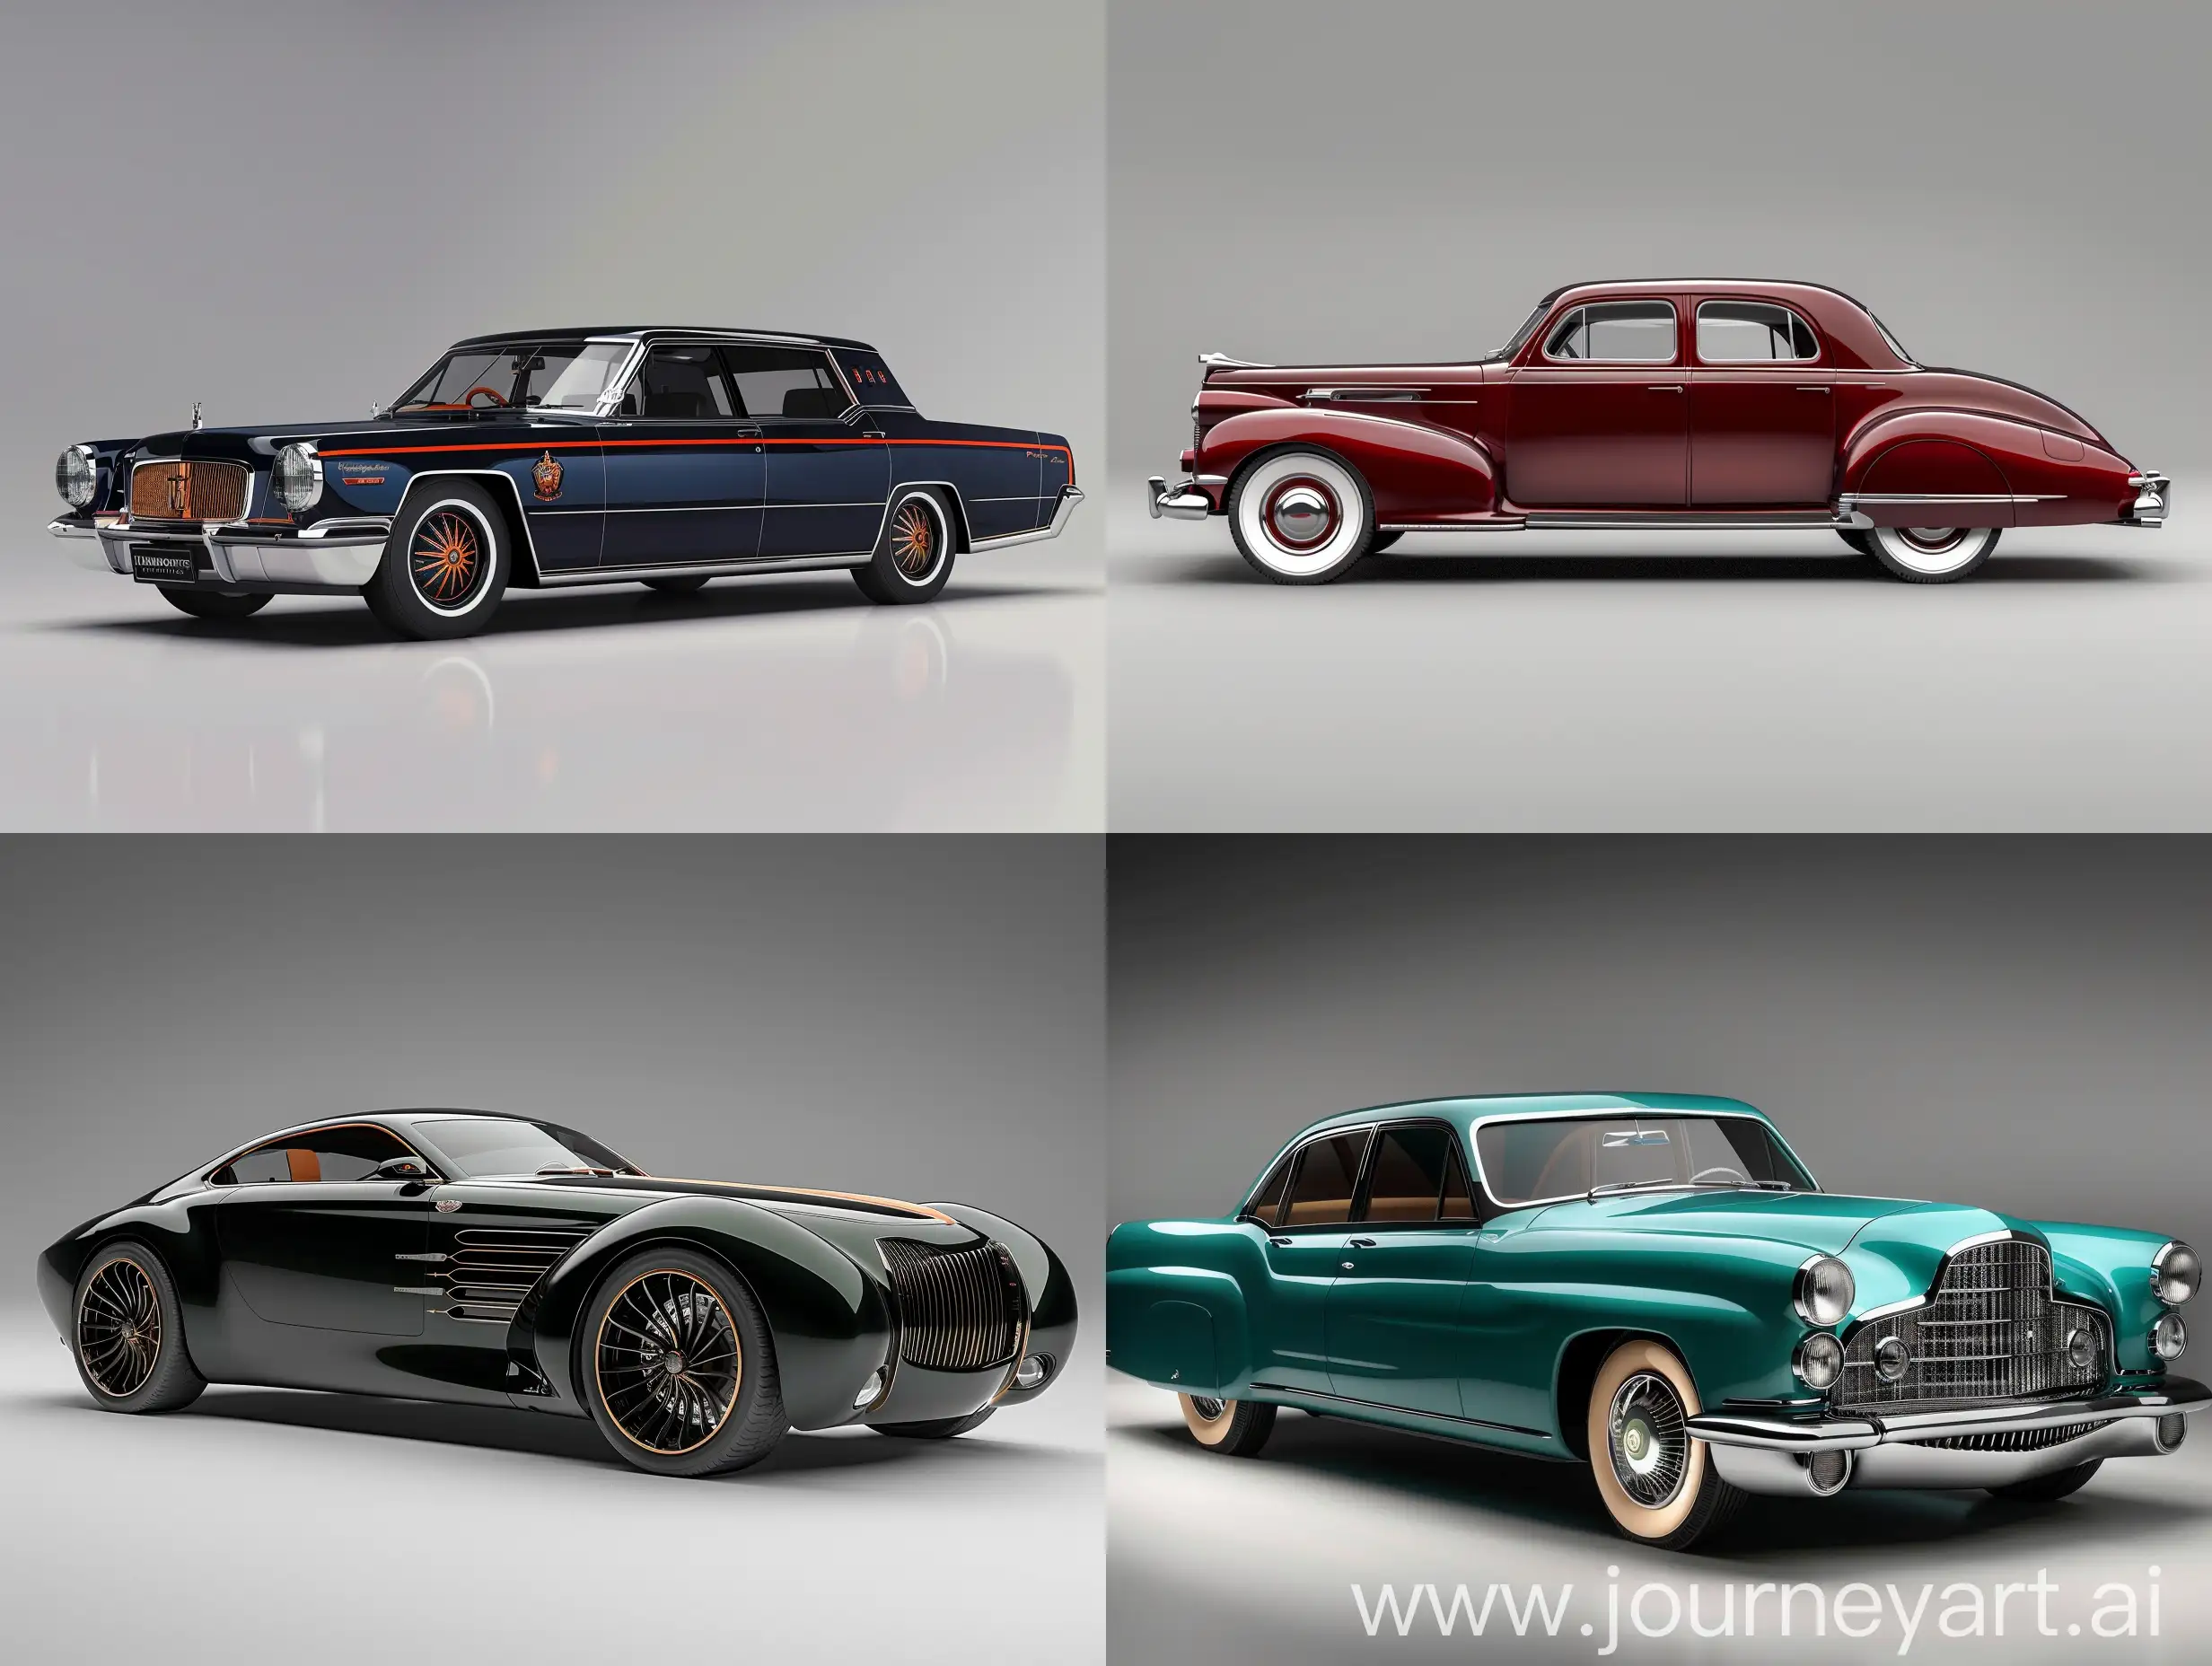 HINDUSTHAN MOTERS CAR ambassador redesign with keywords Elegant,
Classic,vintage,
,Polite,
Proud.
